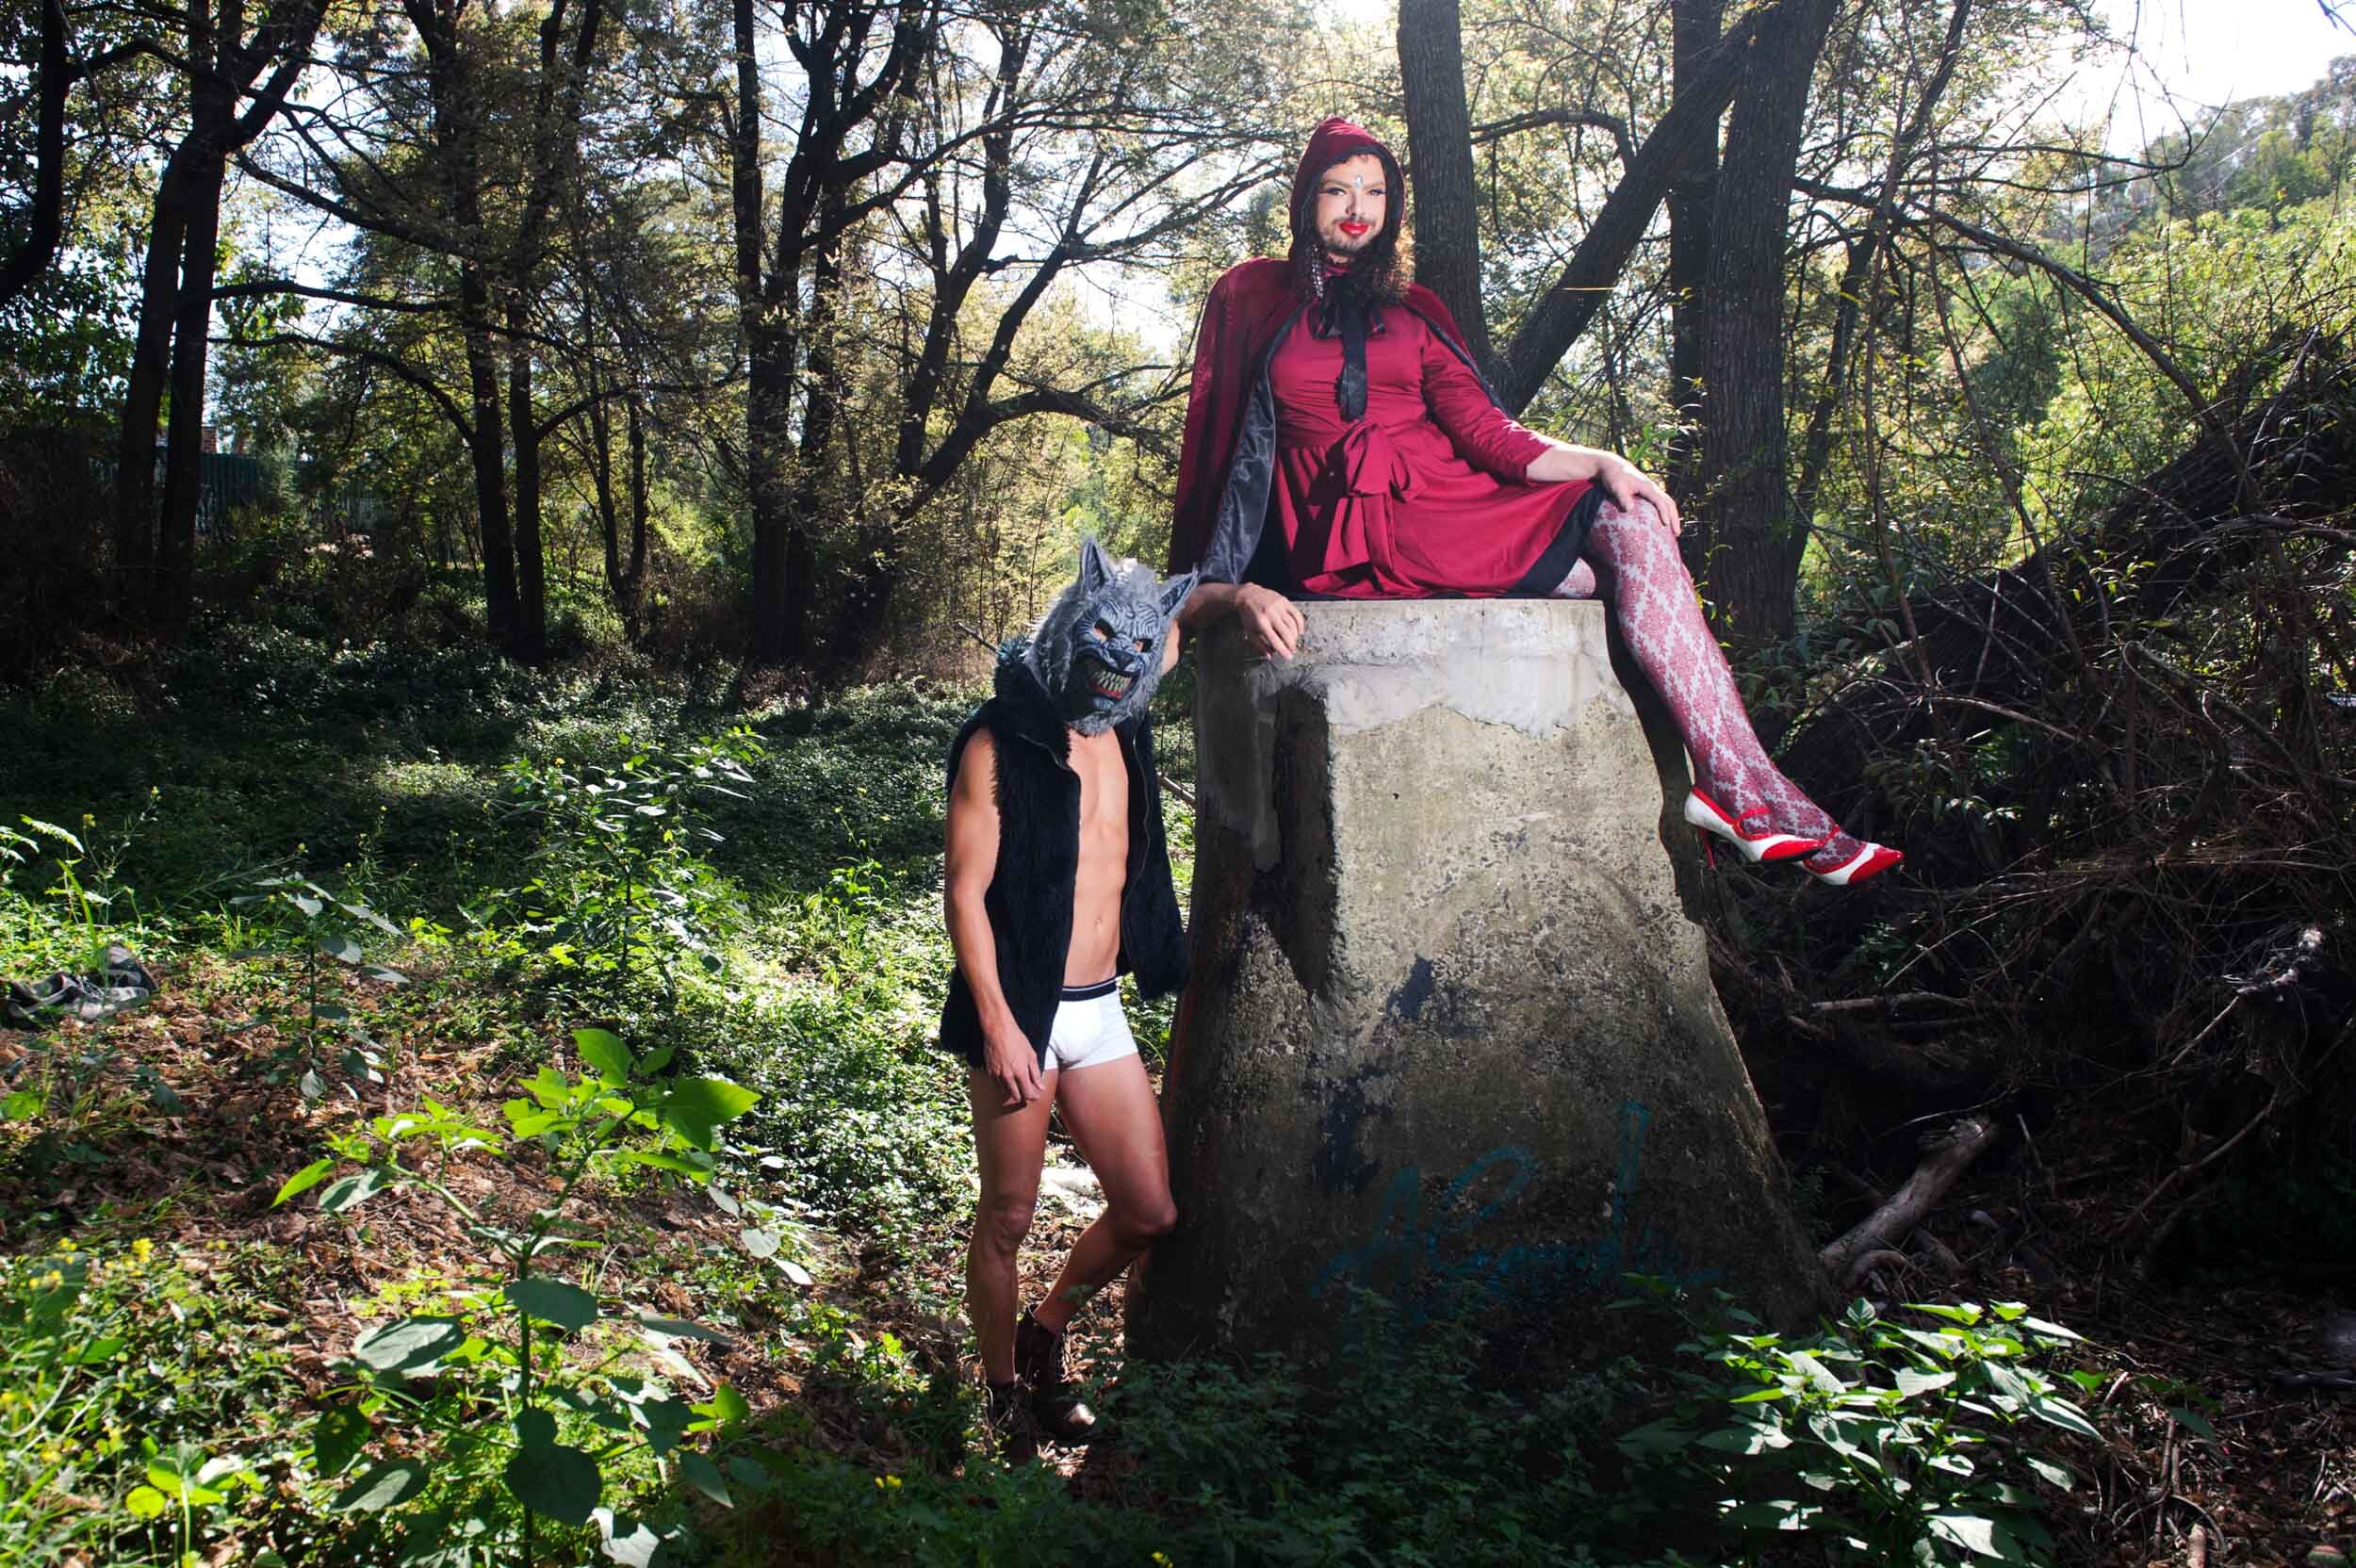  Promo images for ‘Red Riding Hood’, Simon Morrison-Baldwin, 2015. 